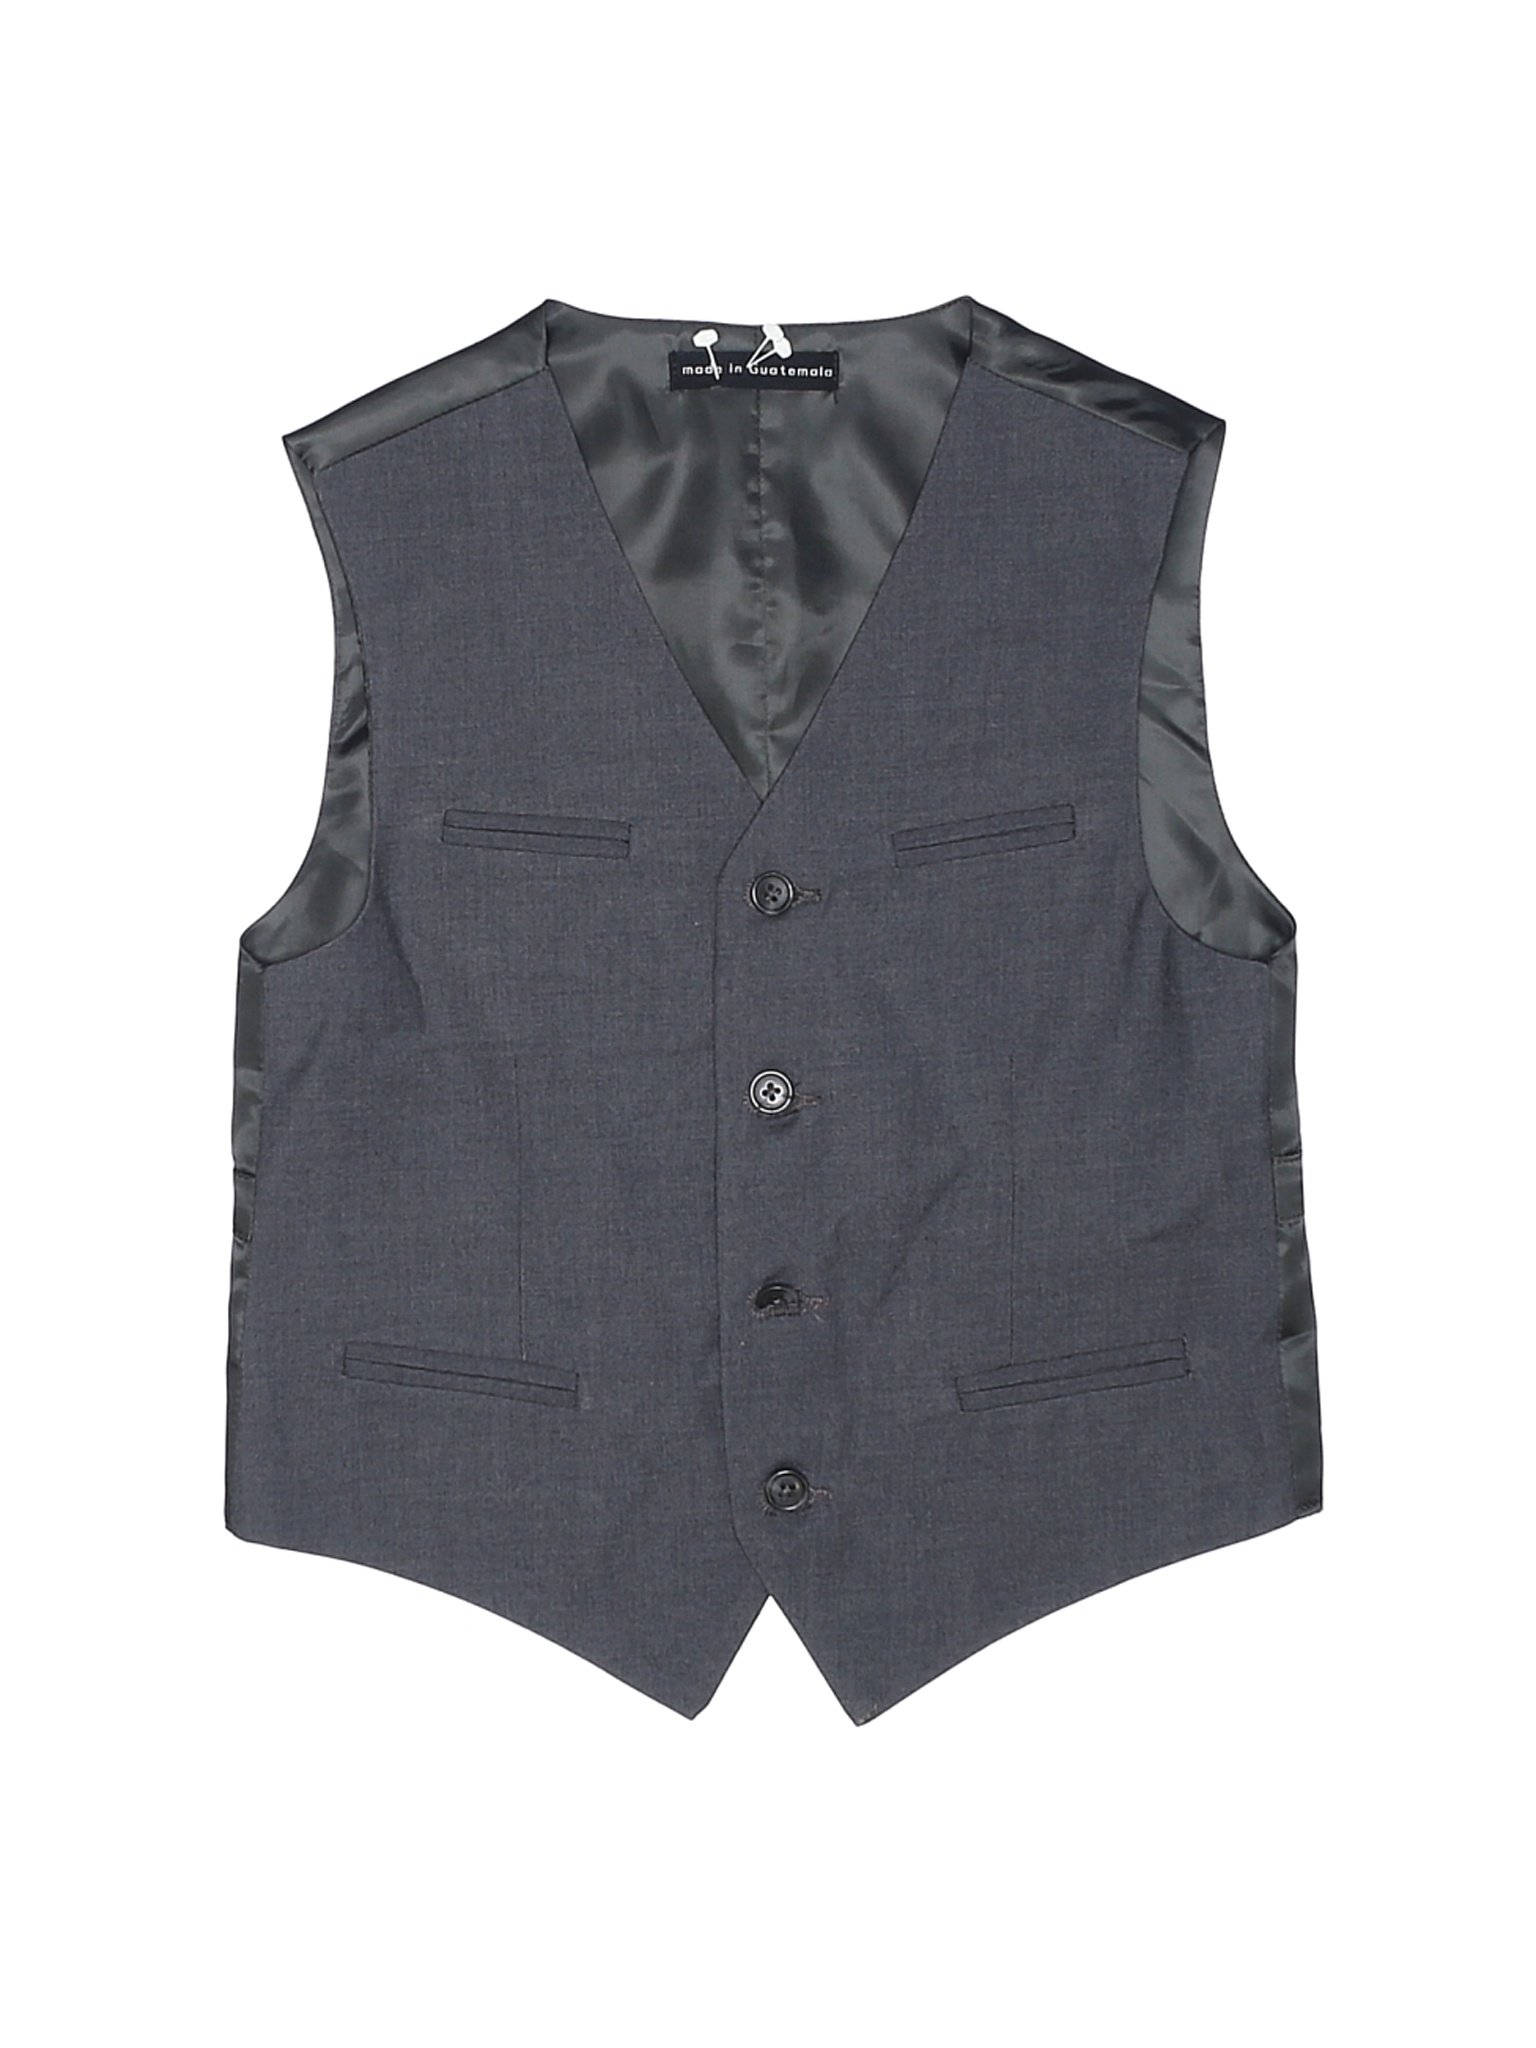 Calvin Klein Boys Gray Tuxedo Vest 10 | eBay